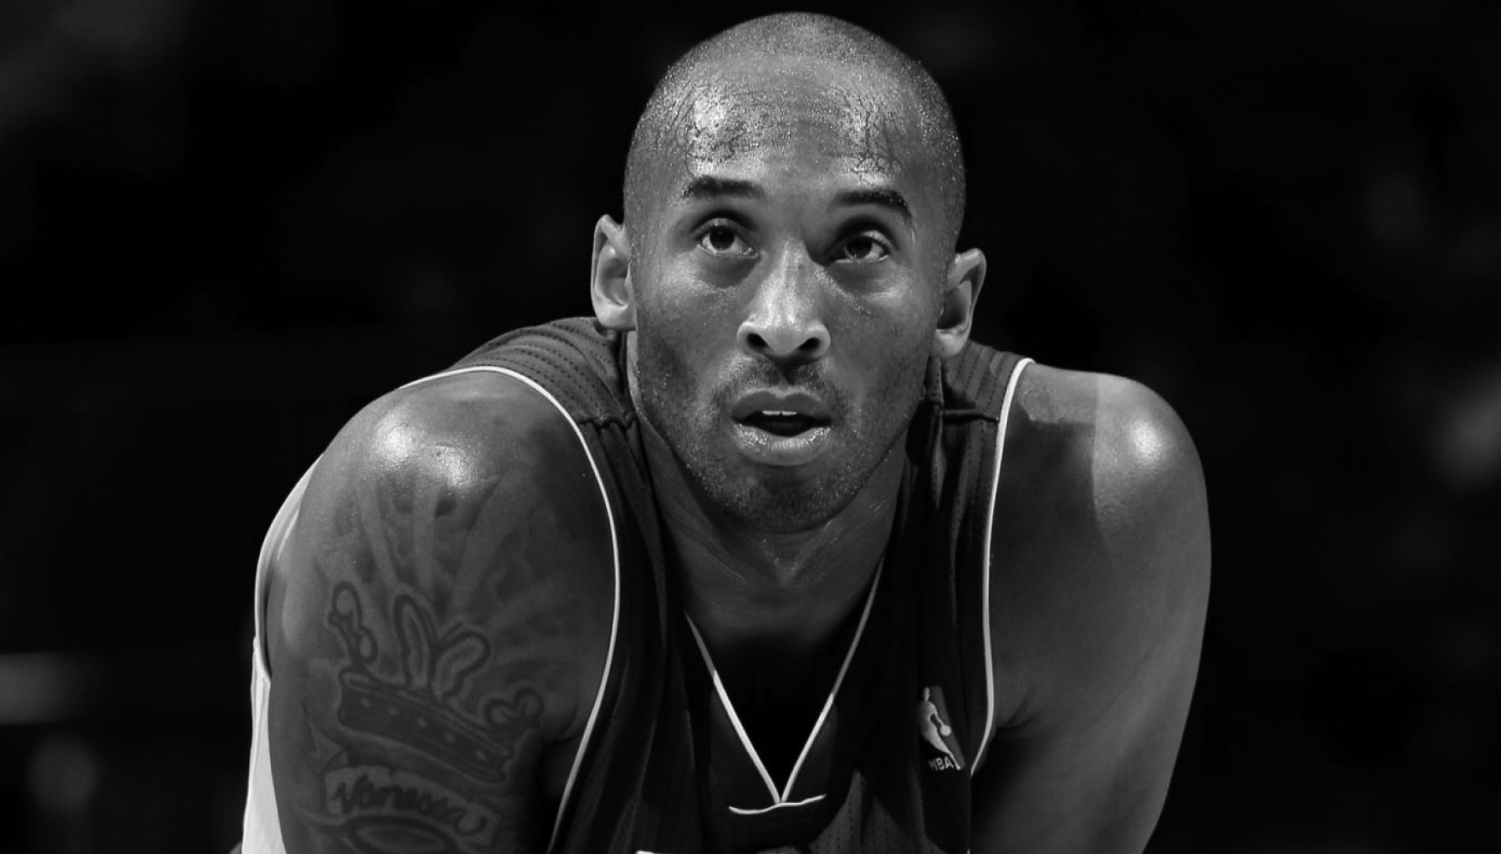 Sports Community Grieves for Kobe Bryant